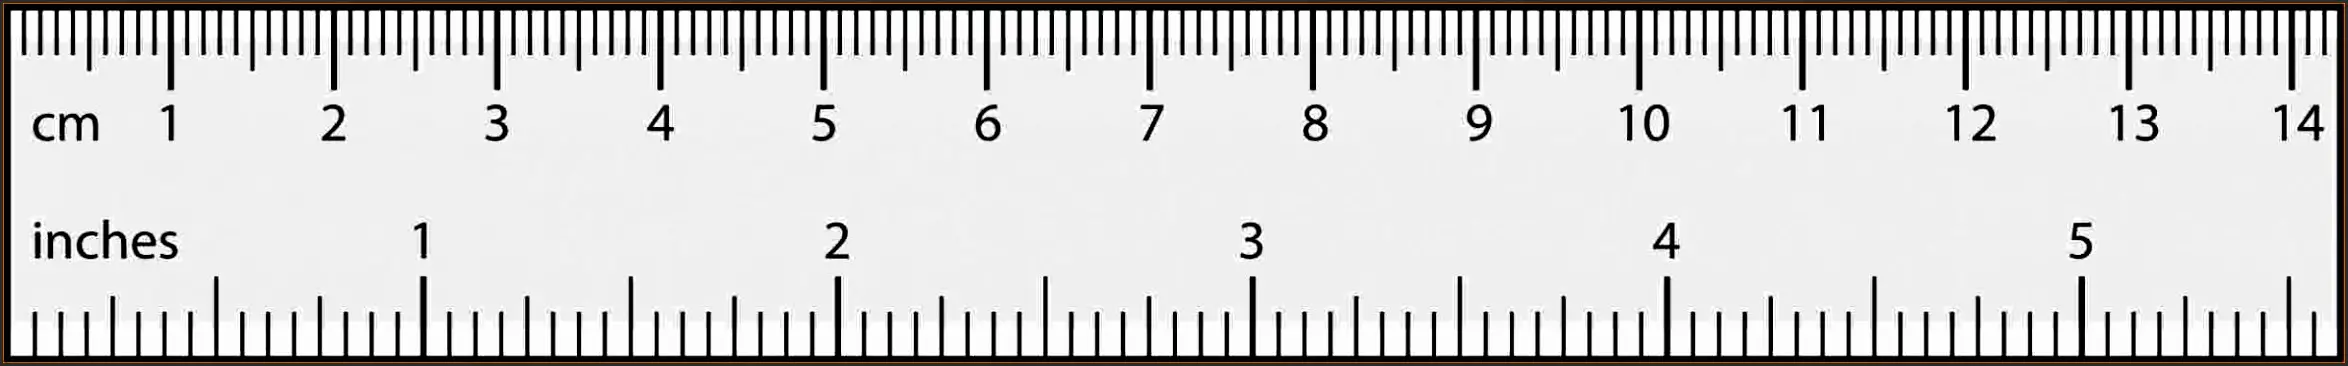 printed rulers